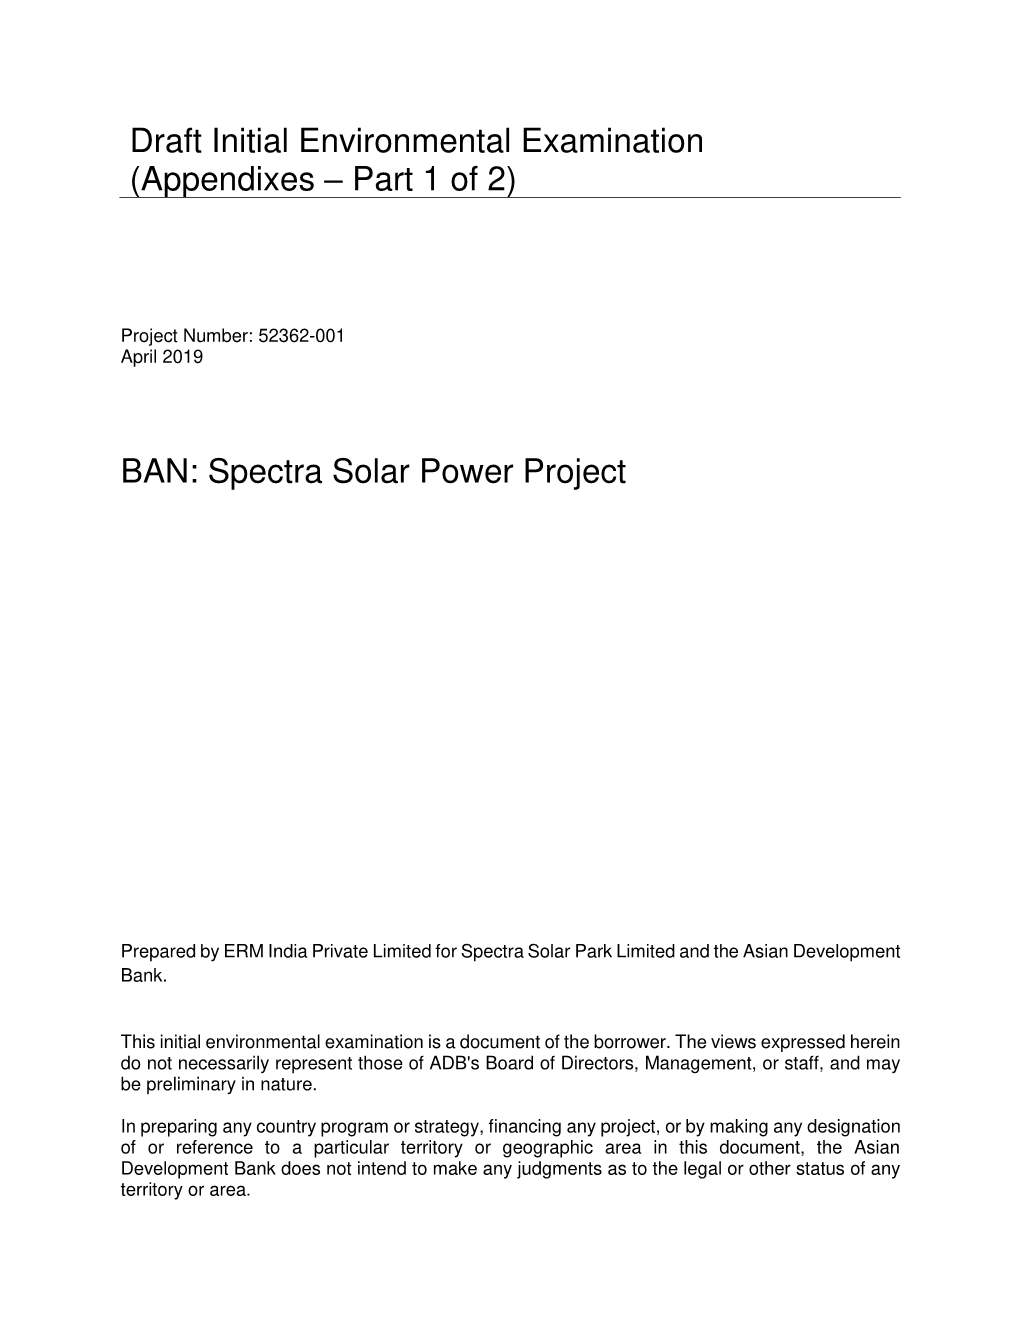 Spectra Solar Power Project